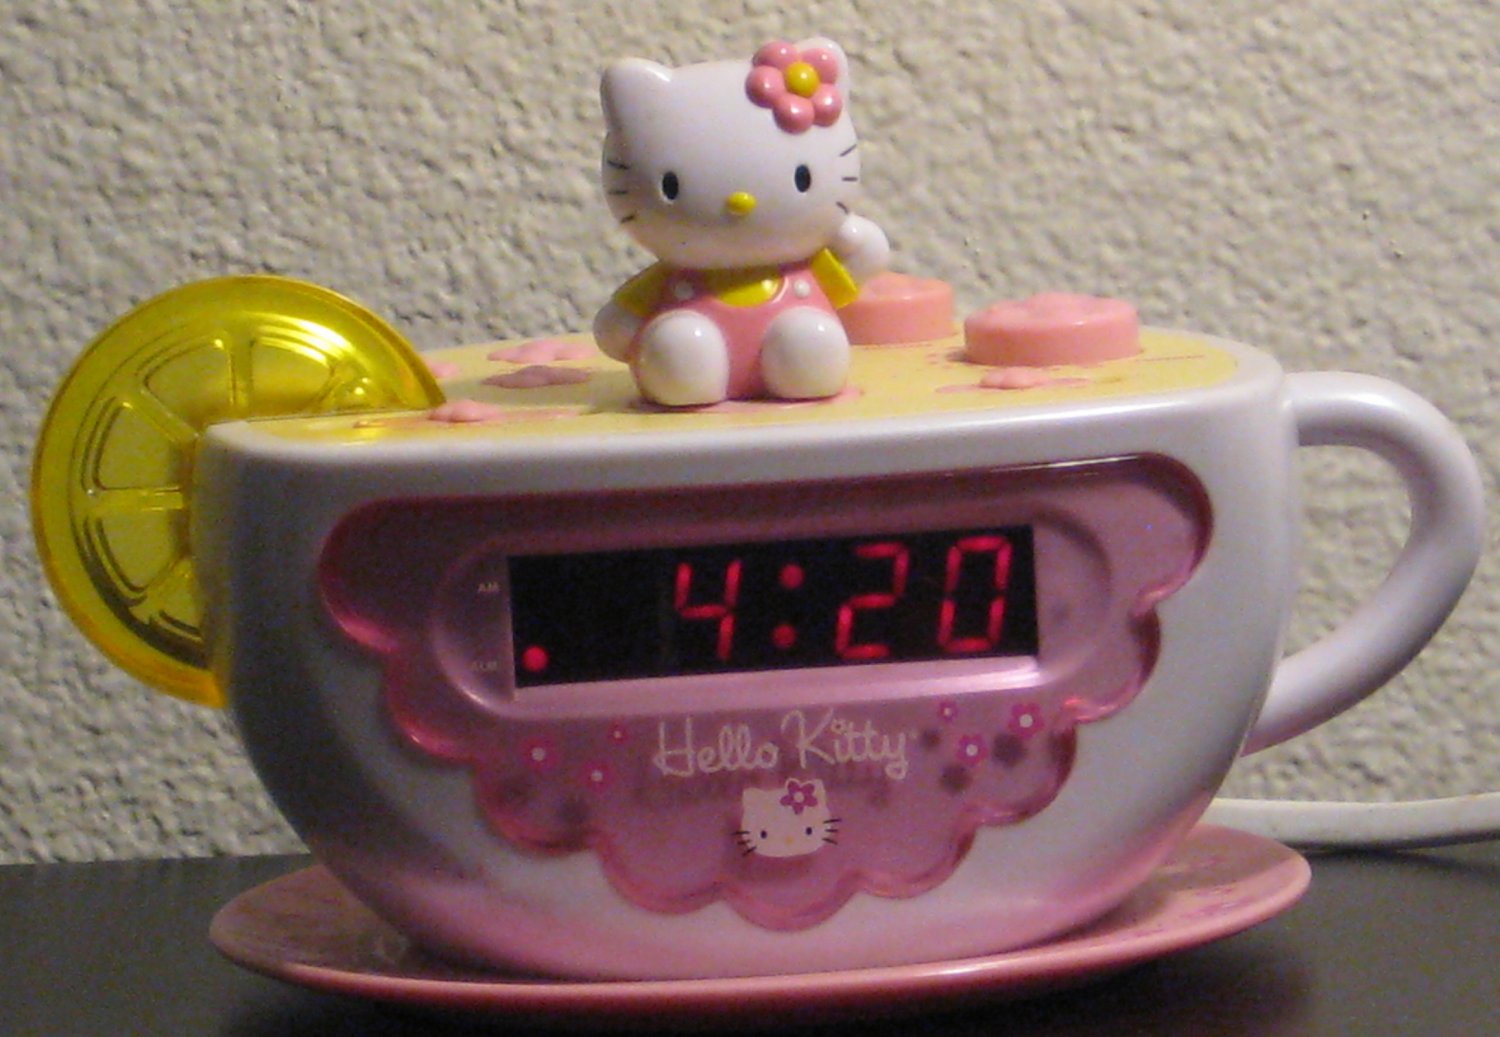 hello kitty teacup alarm